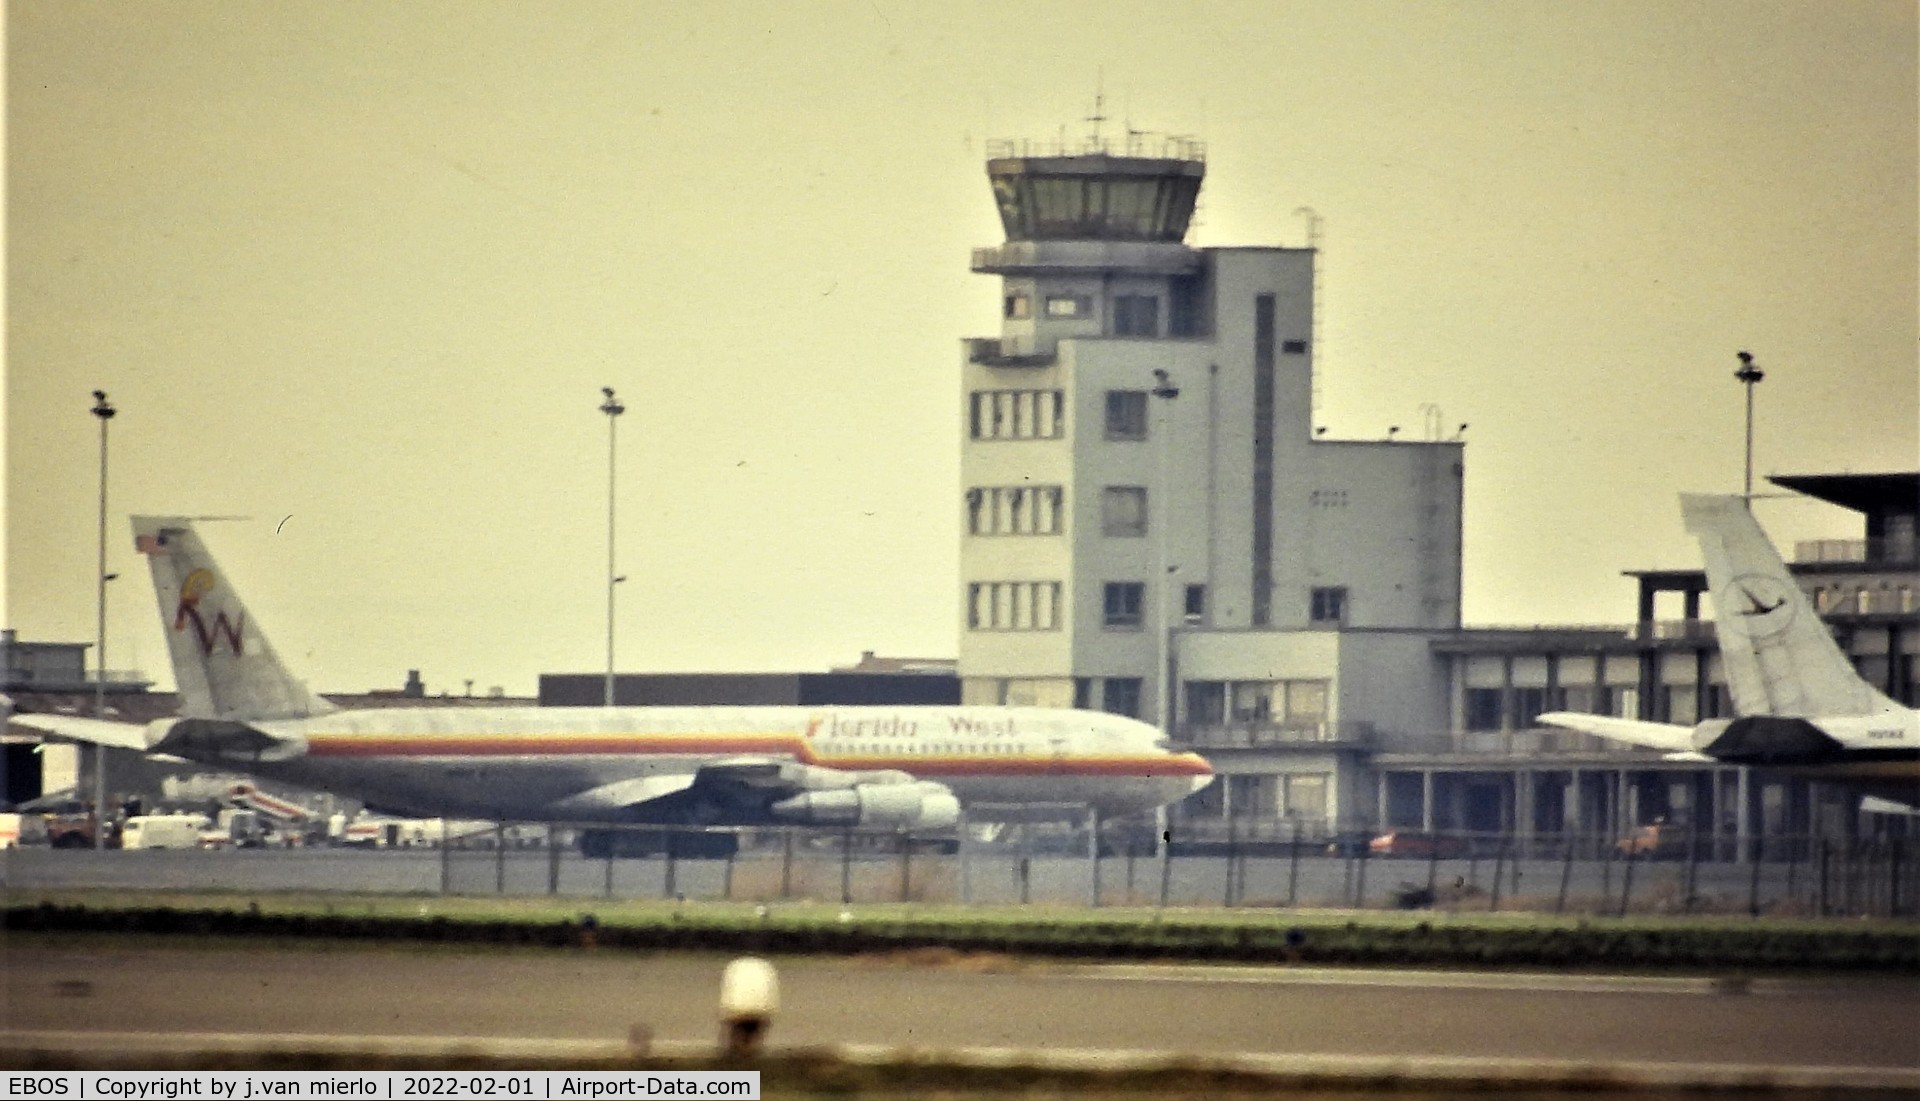 Ostend-Bruges International Airport, Ostend Belgium (EBOS) - Decades ago